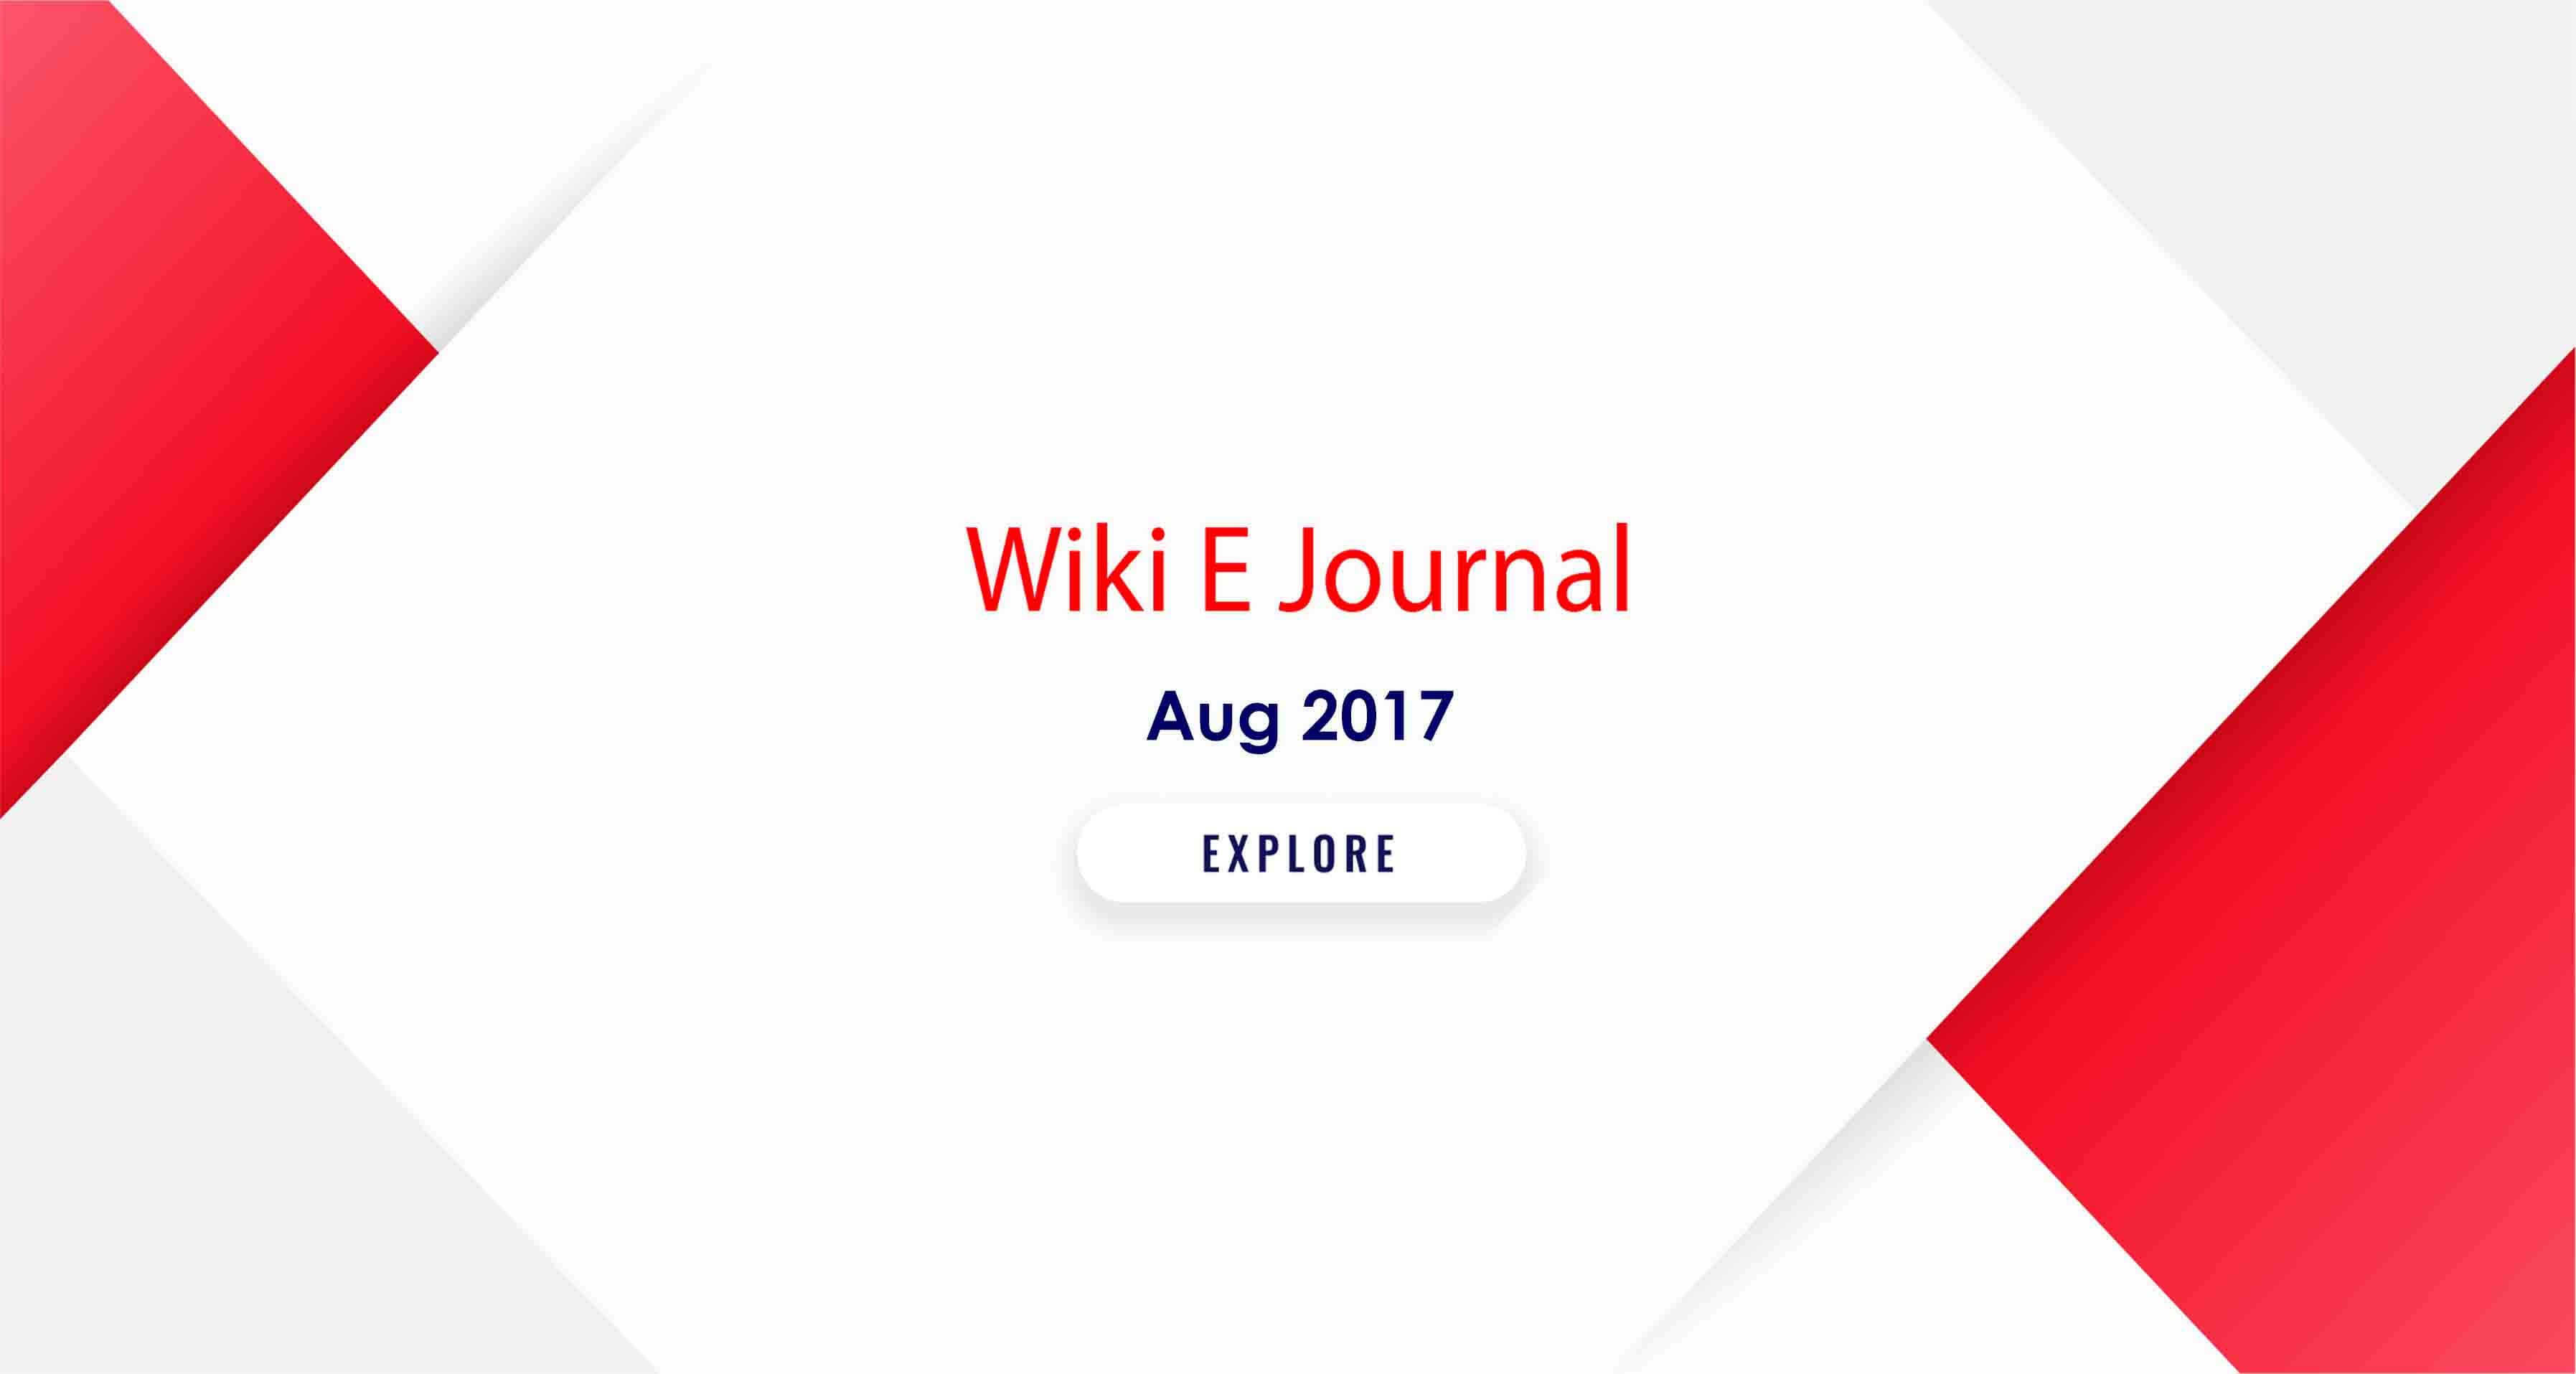 SBS WIKI E Journal Aug 2017